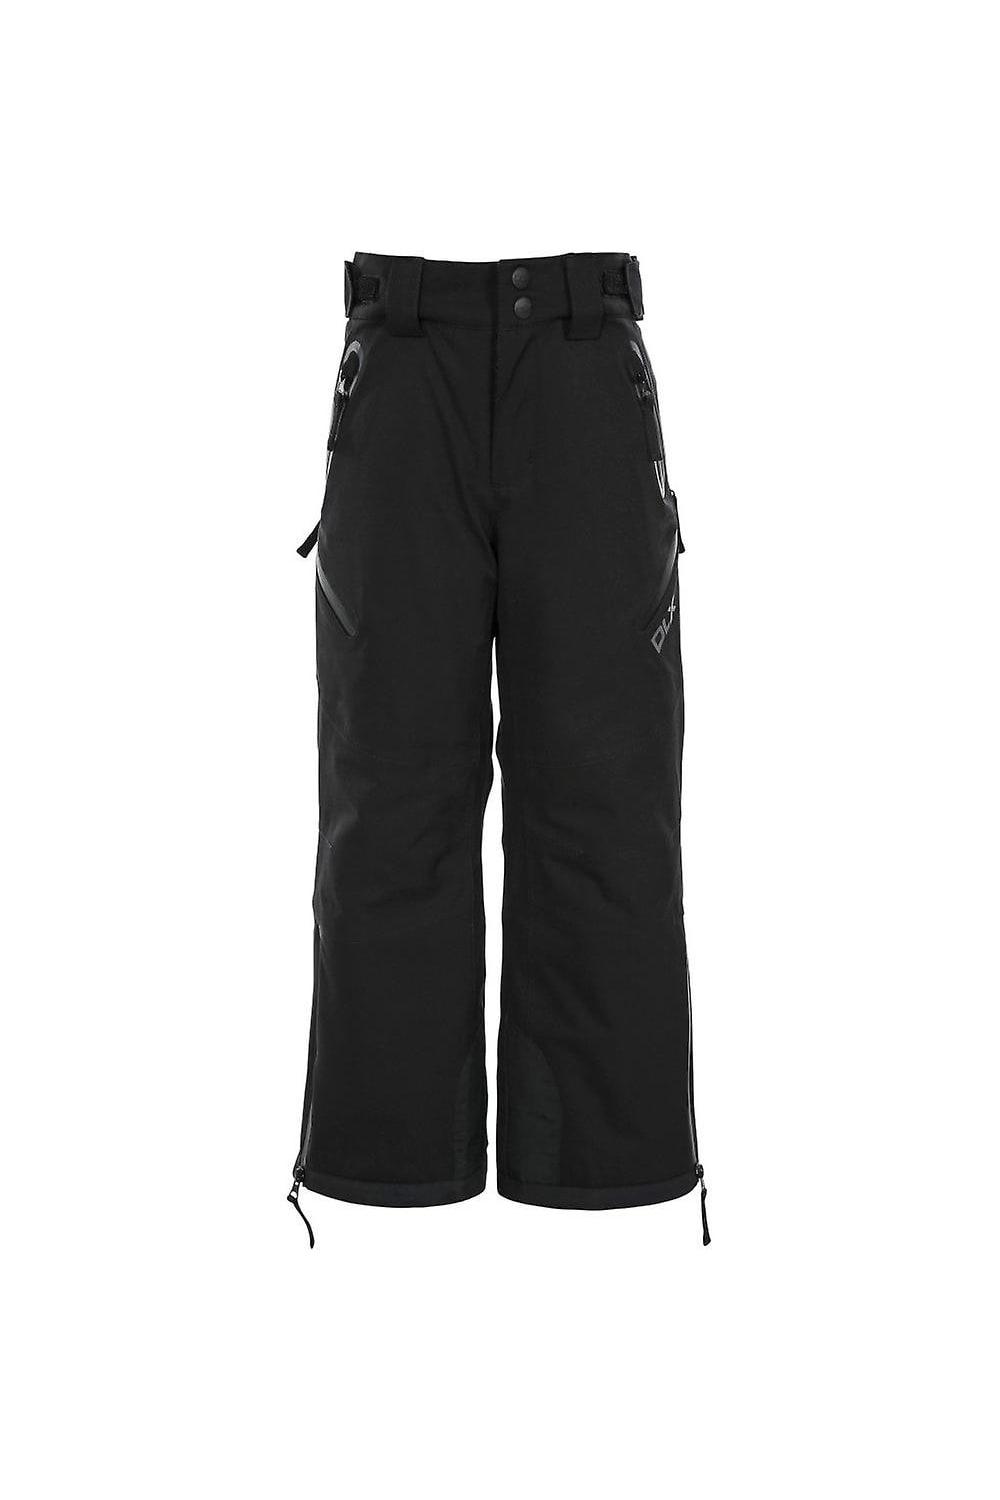 Trespass Boys Dozer DLX Ski Pants (Black)